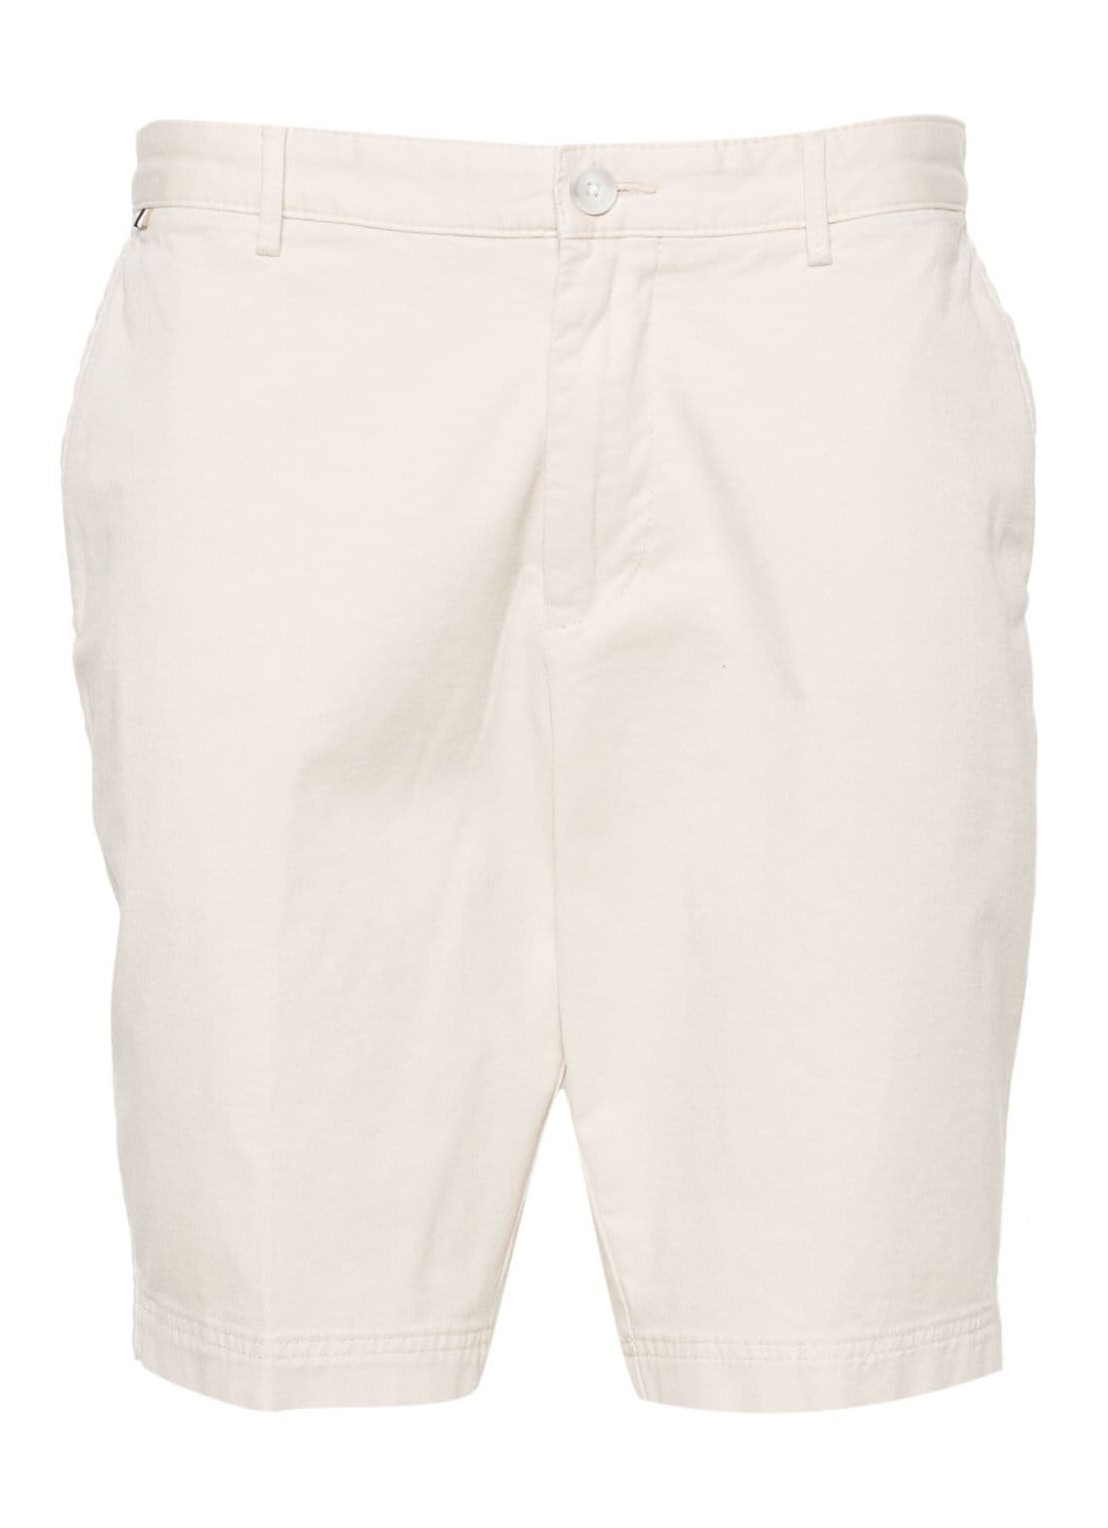 Pantalon corto boss short pant man slice-short 50487993 102 talla 48
 